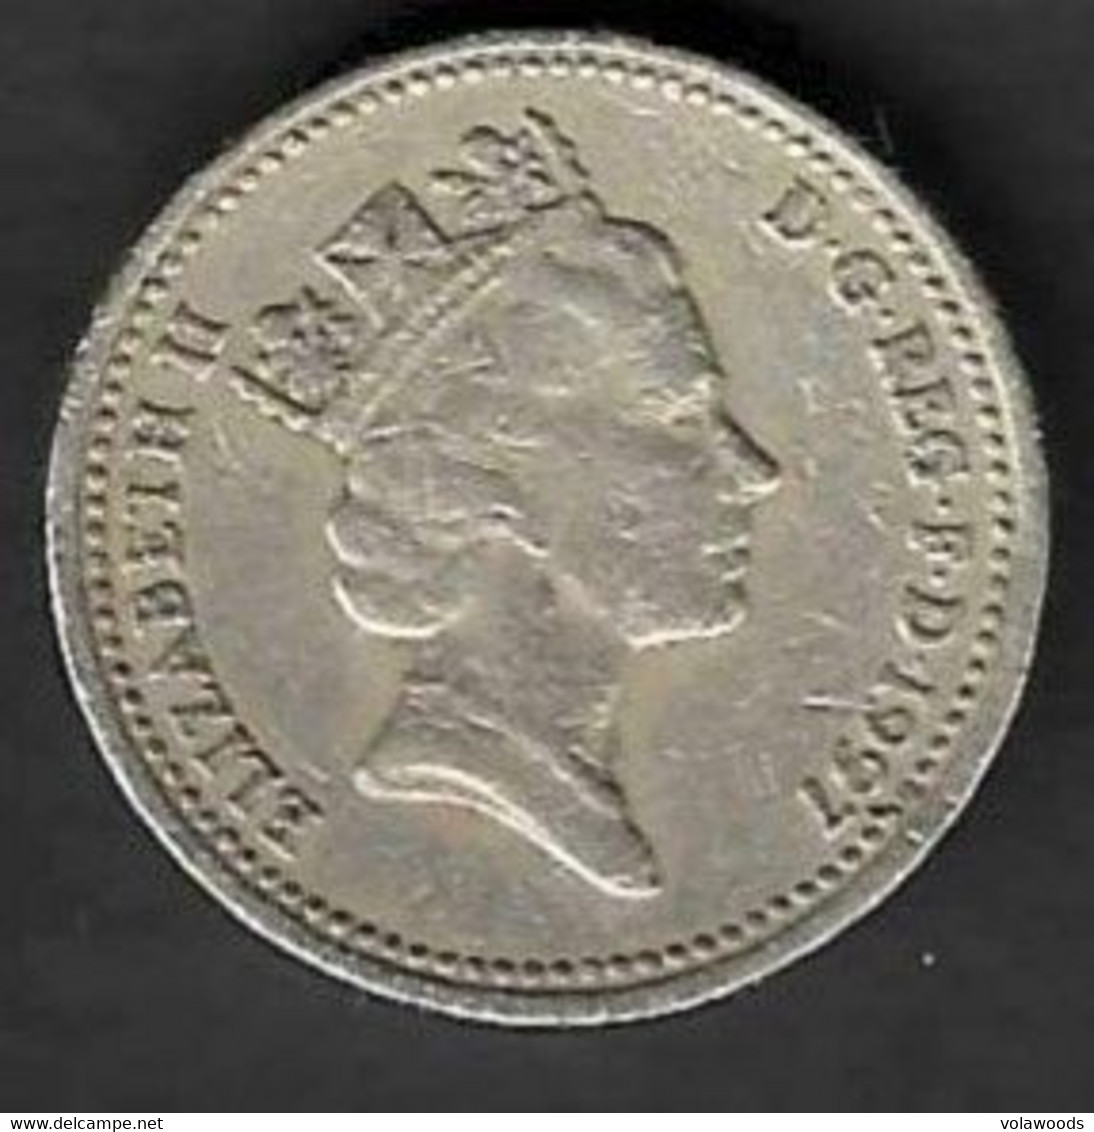 Regno Unito - Moneta Circolata Da 1 Pound "Three Lions Of England" Km975 - 1997 - 1 Pond